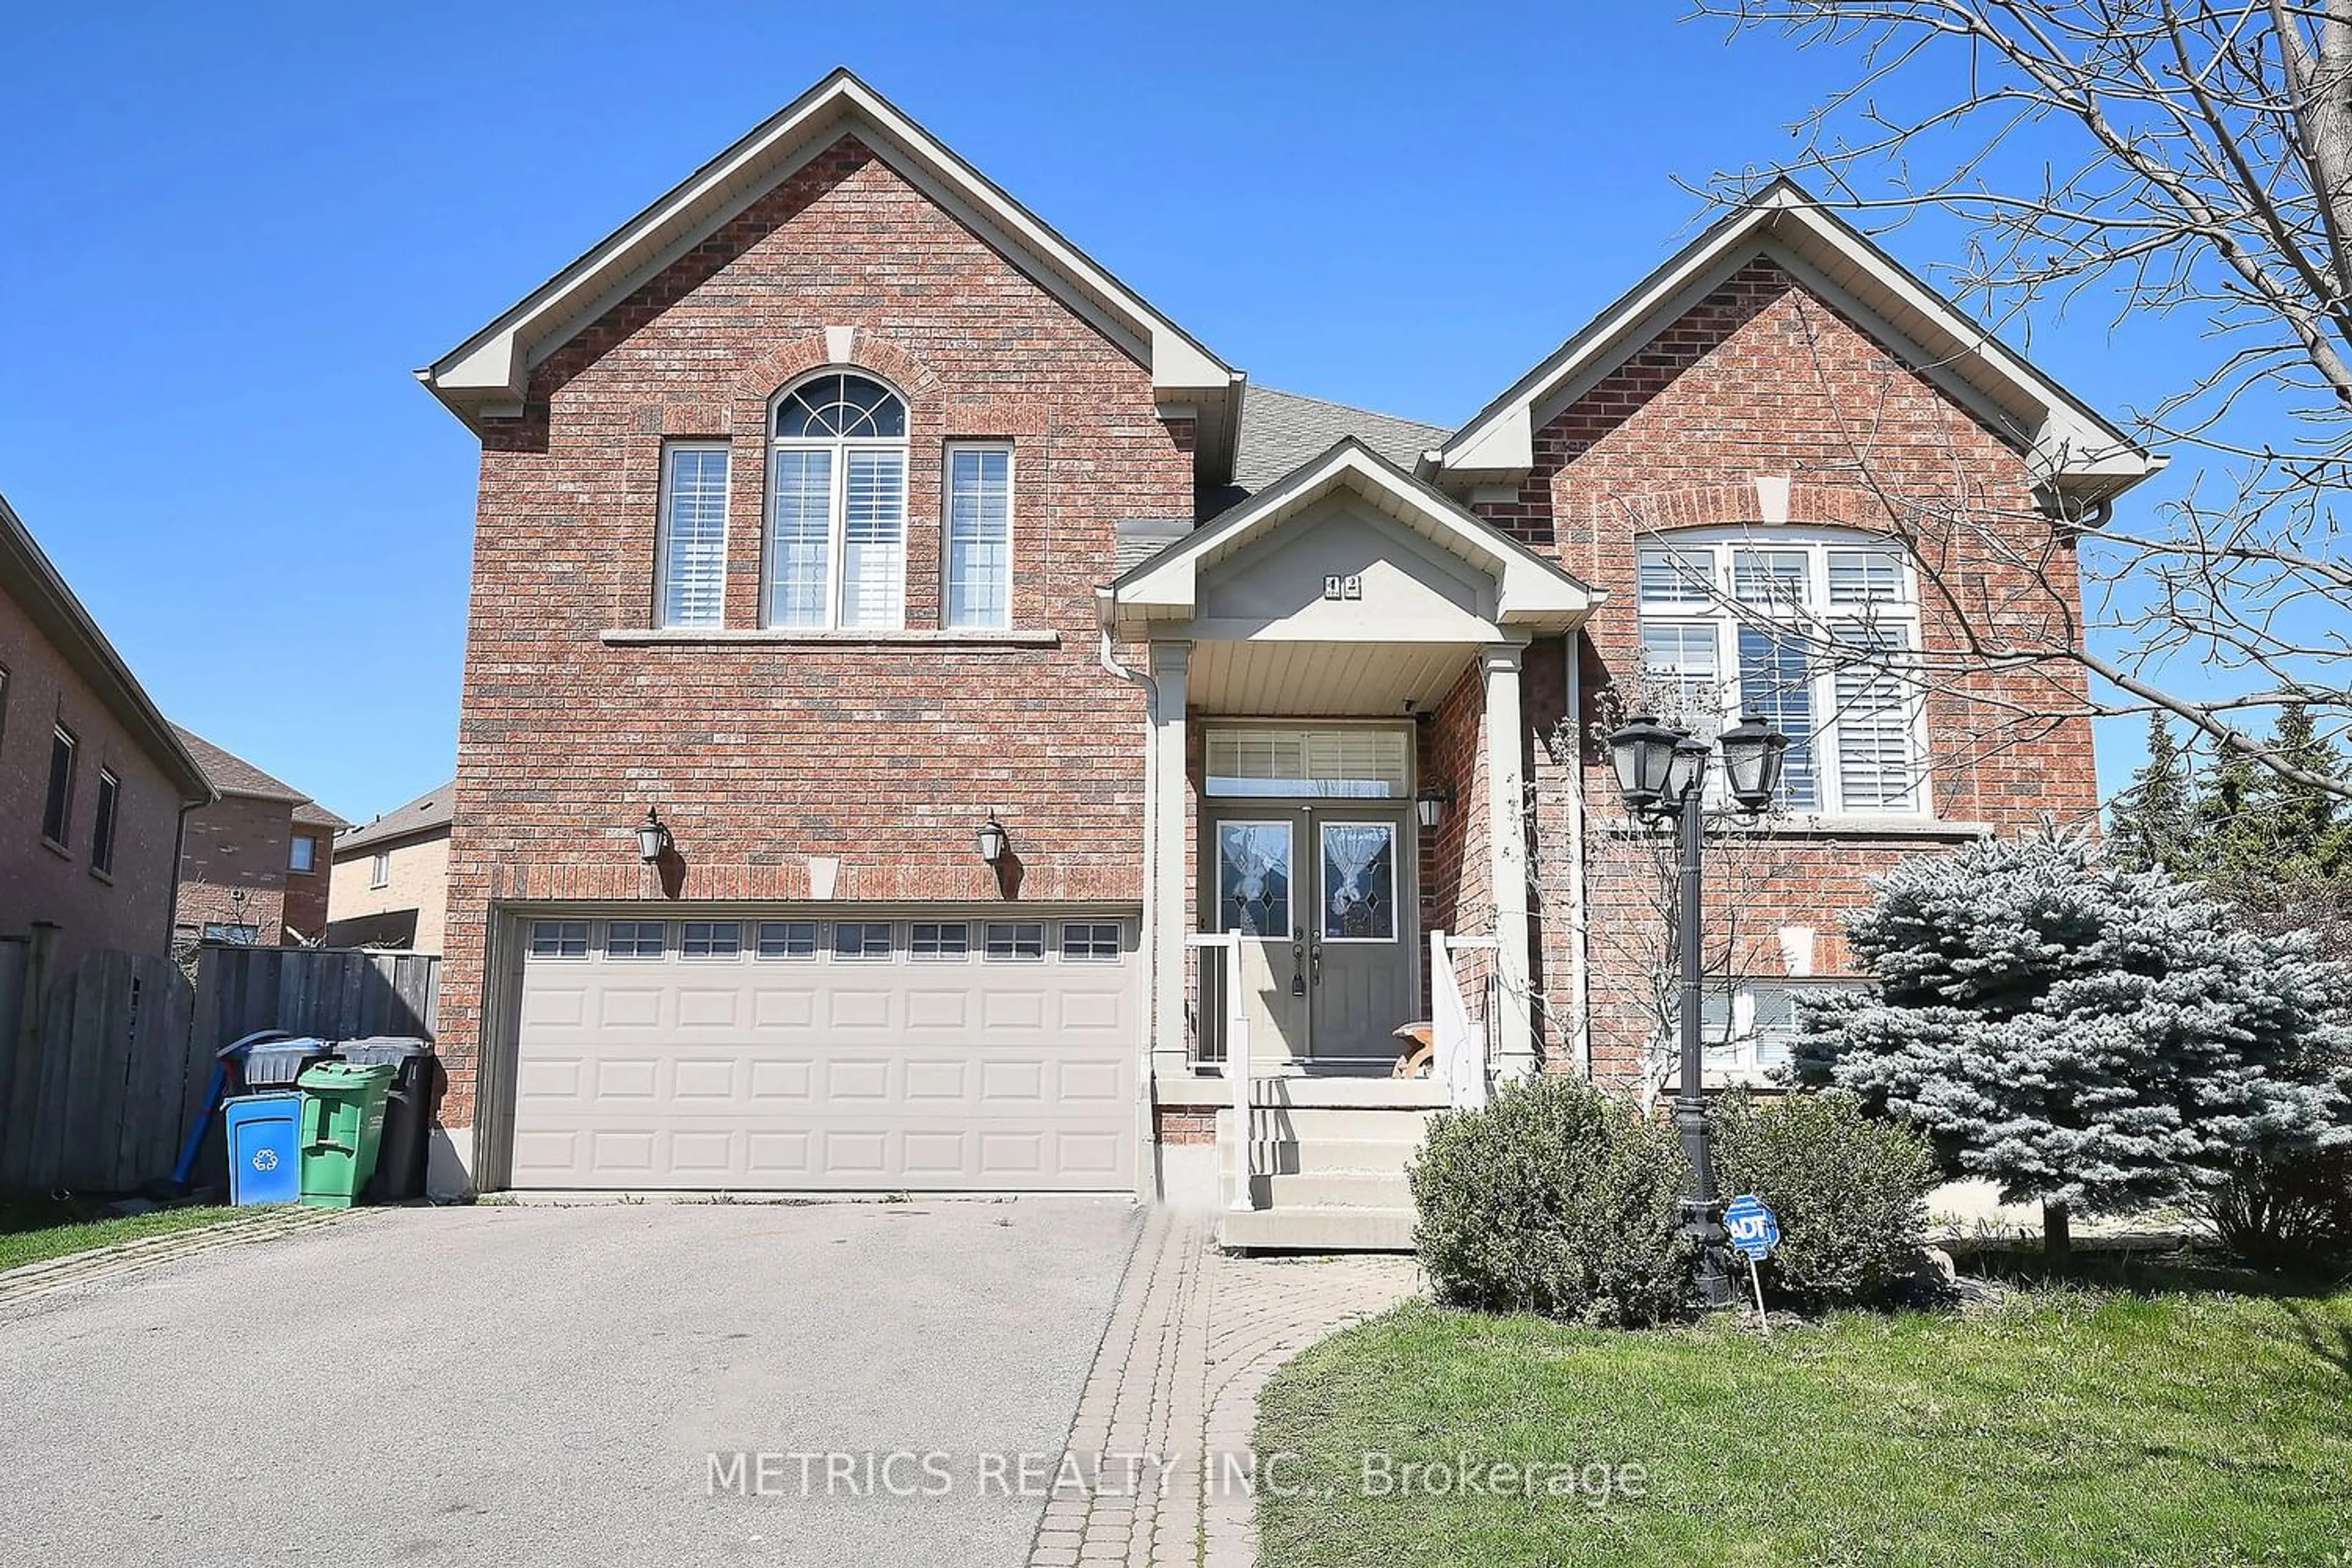 Home with brick exterior material for 42 Carmel Cres, Brampton Ontario L6P 1Y2